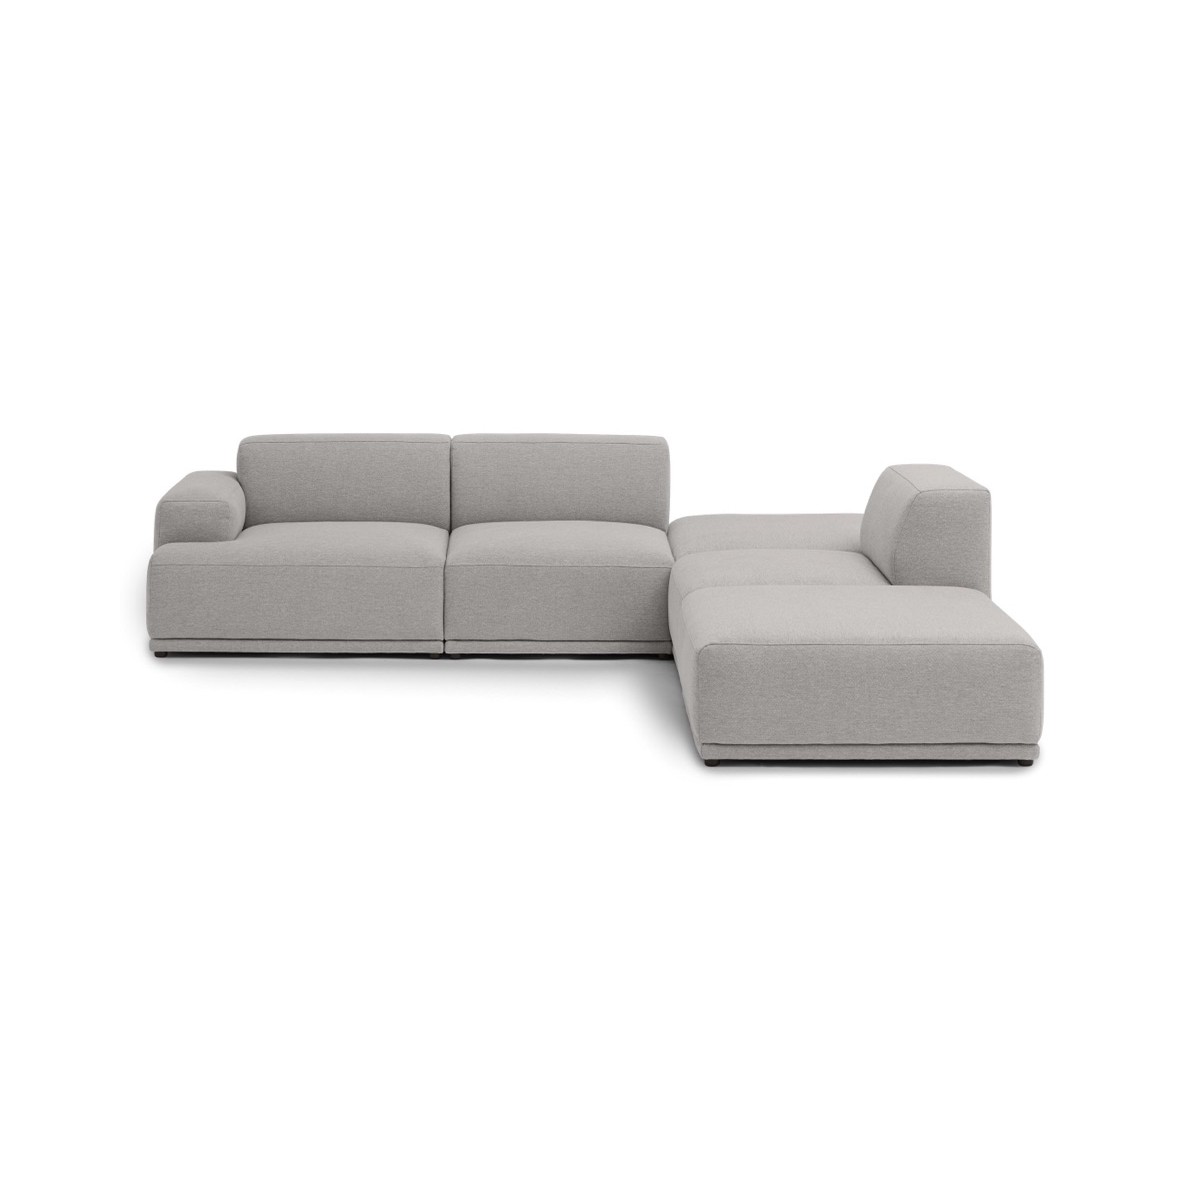 Connect Soft - corner sofa, Configuration 3 - Clay 12 fabric